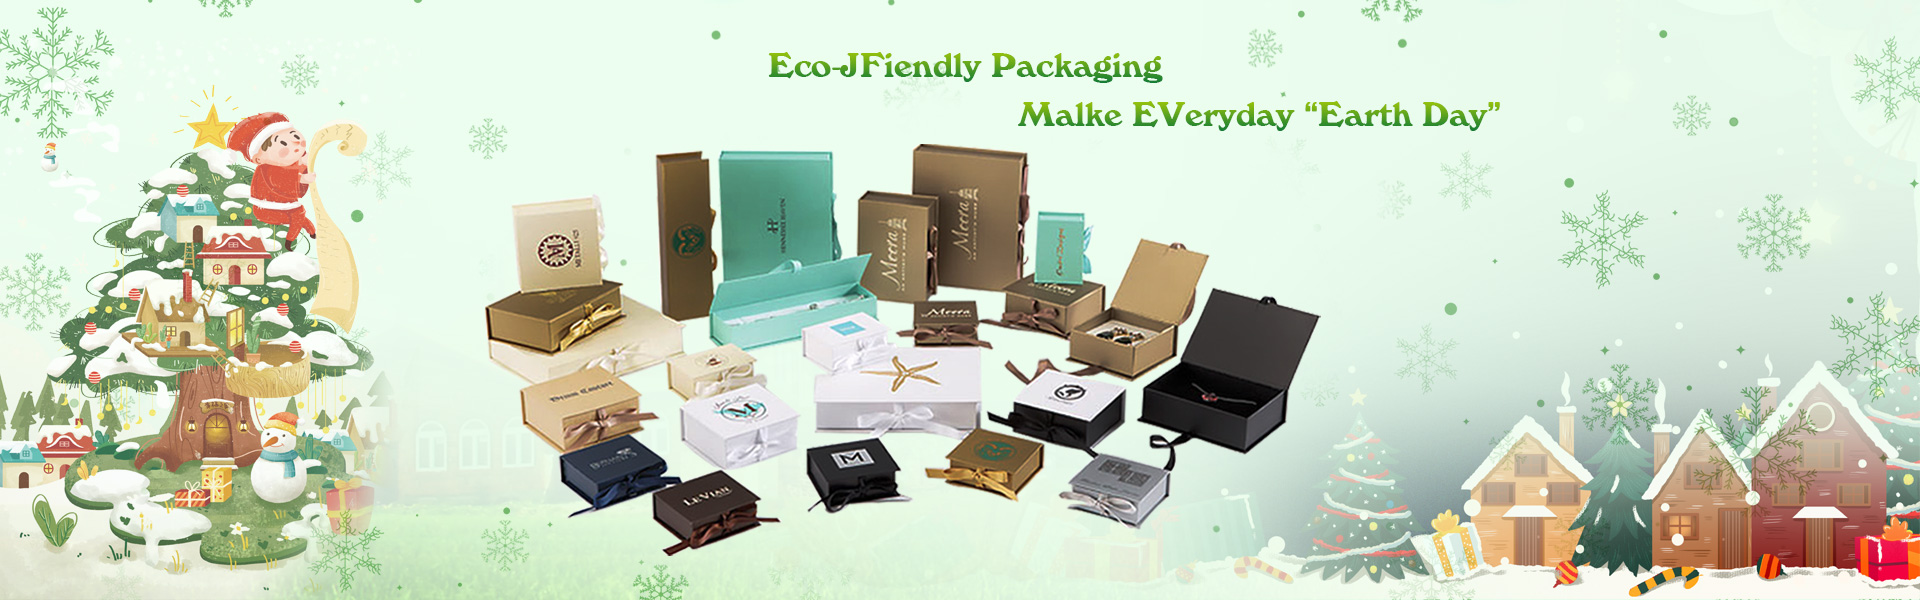 Caixa de presente, caixa de embalagem, etiqueta,Dongguan chengyuan packaging products Co,.Ltd